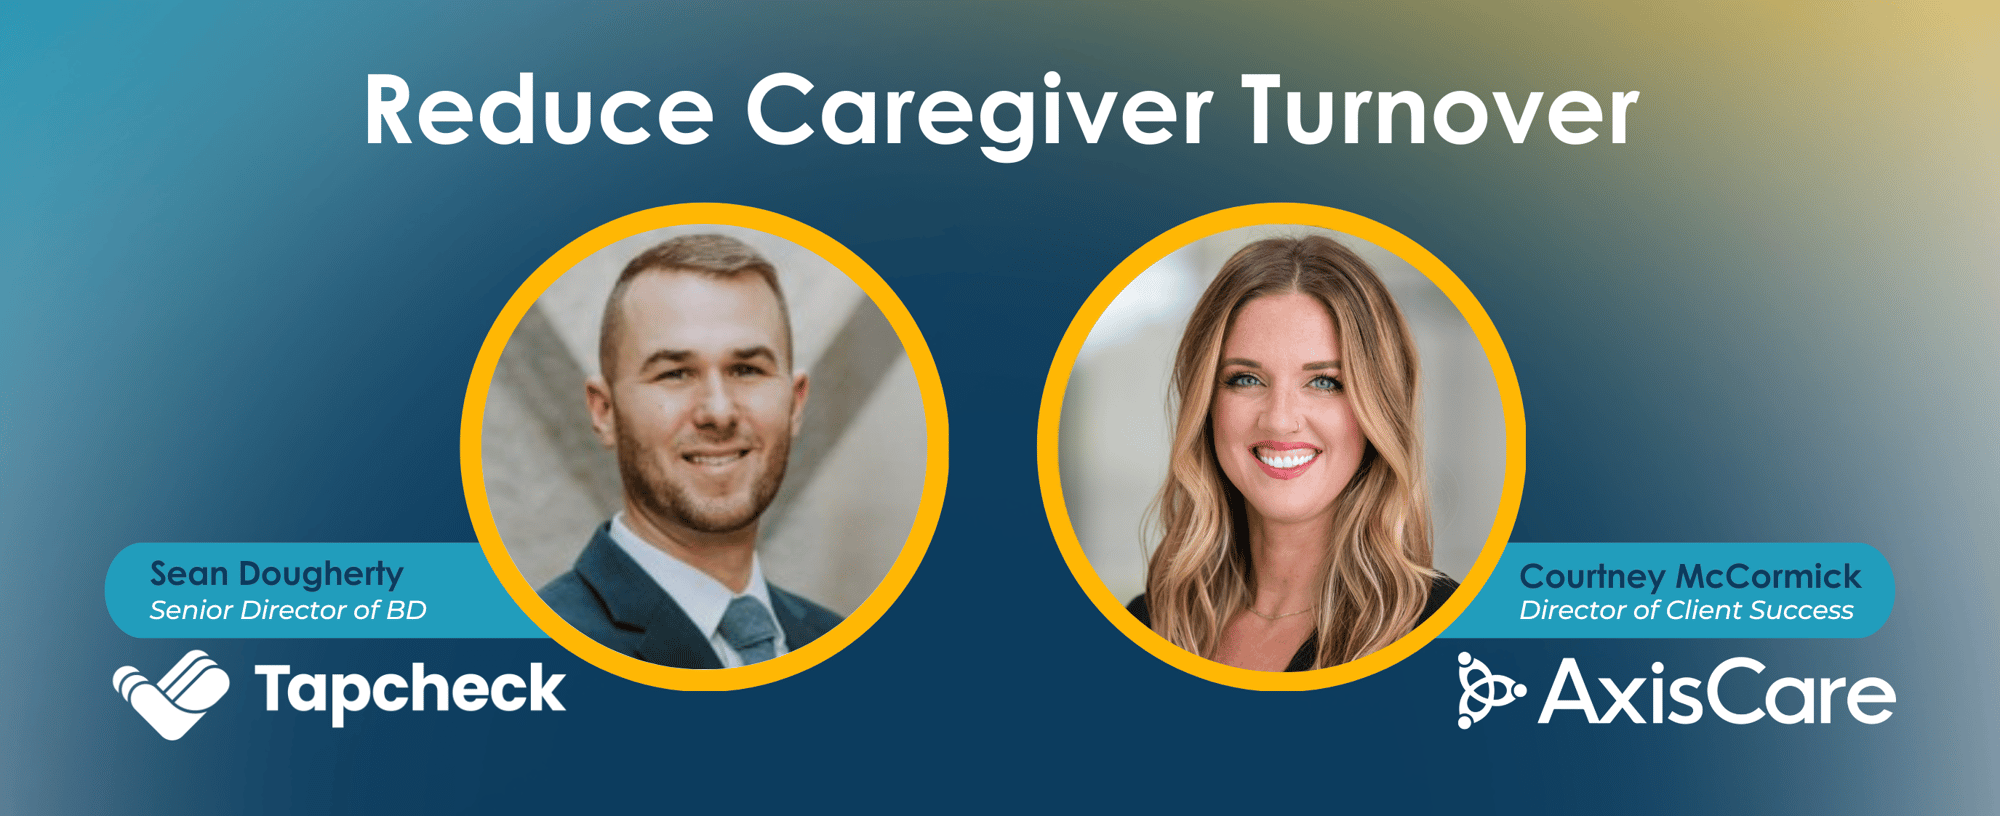 Webinar - Reduce Caregiver Turnover-1